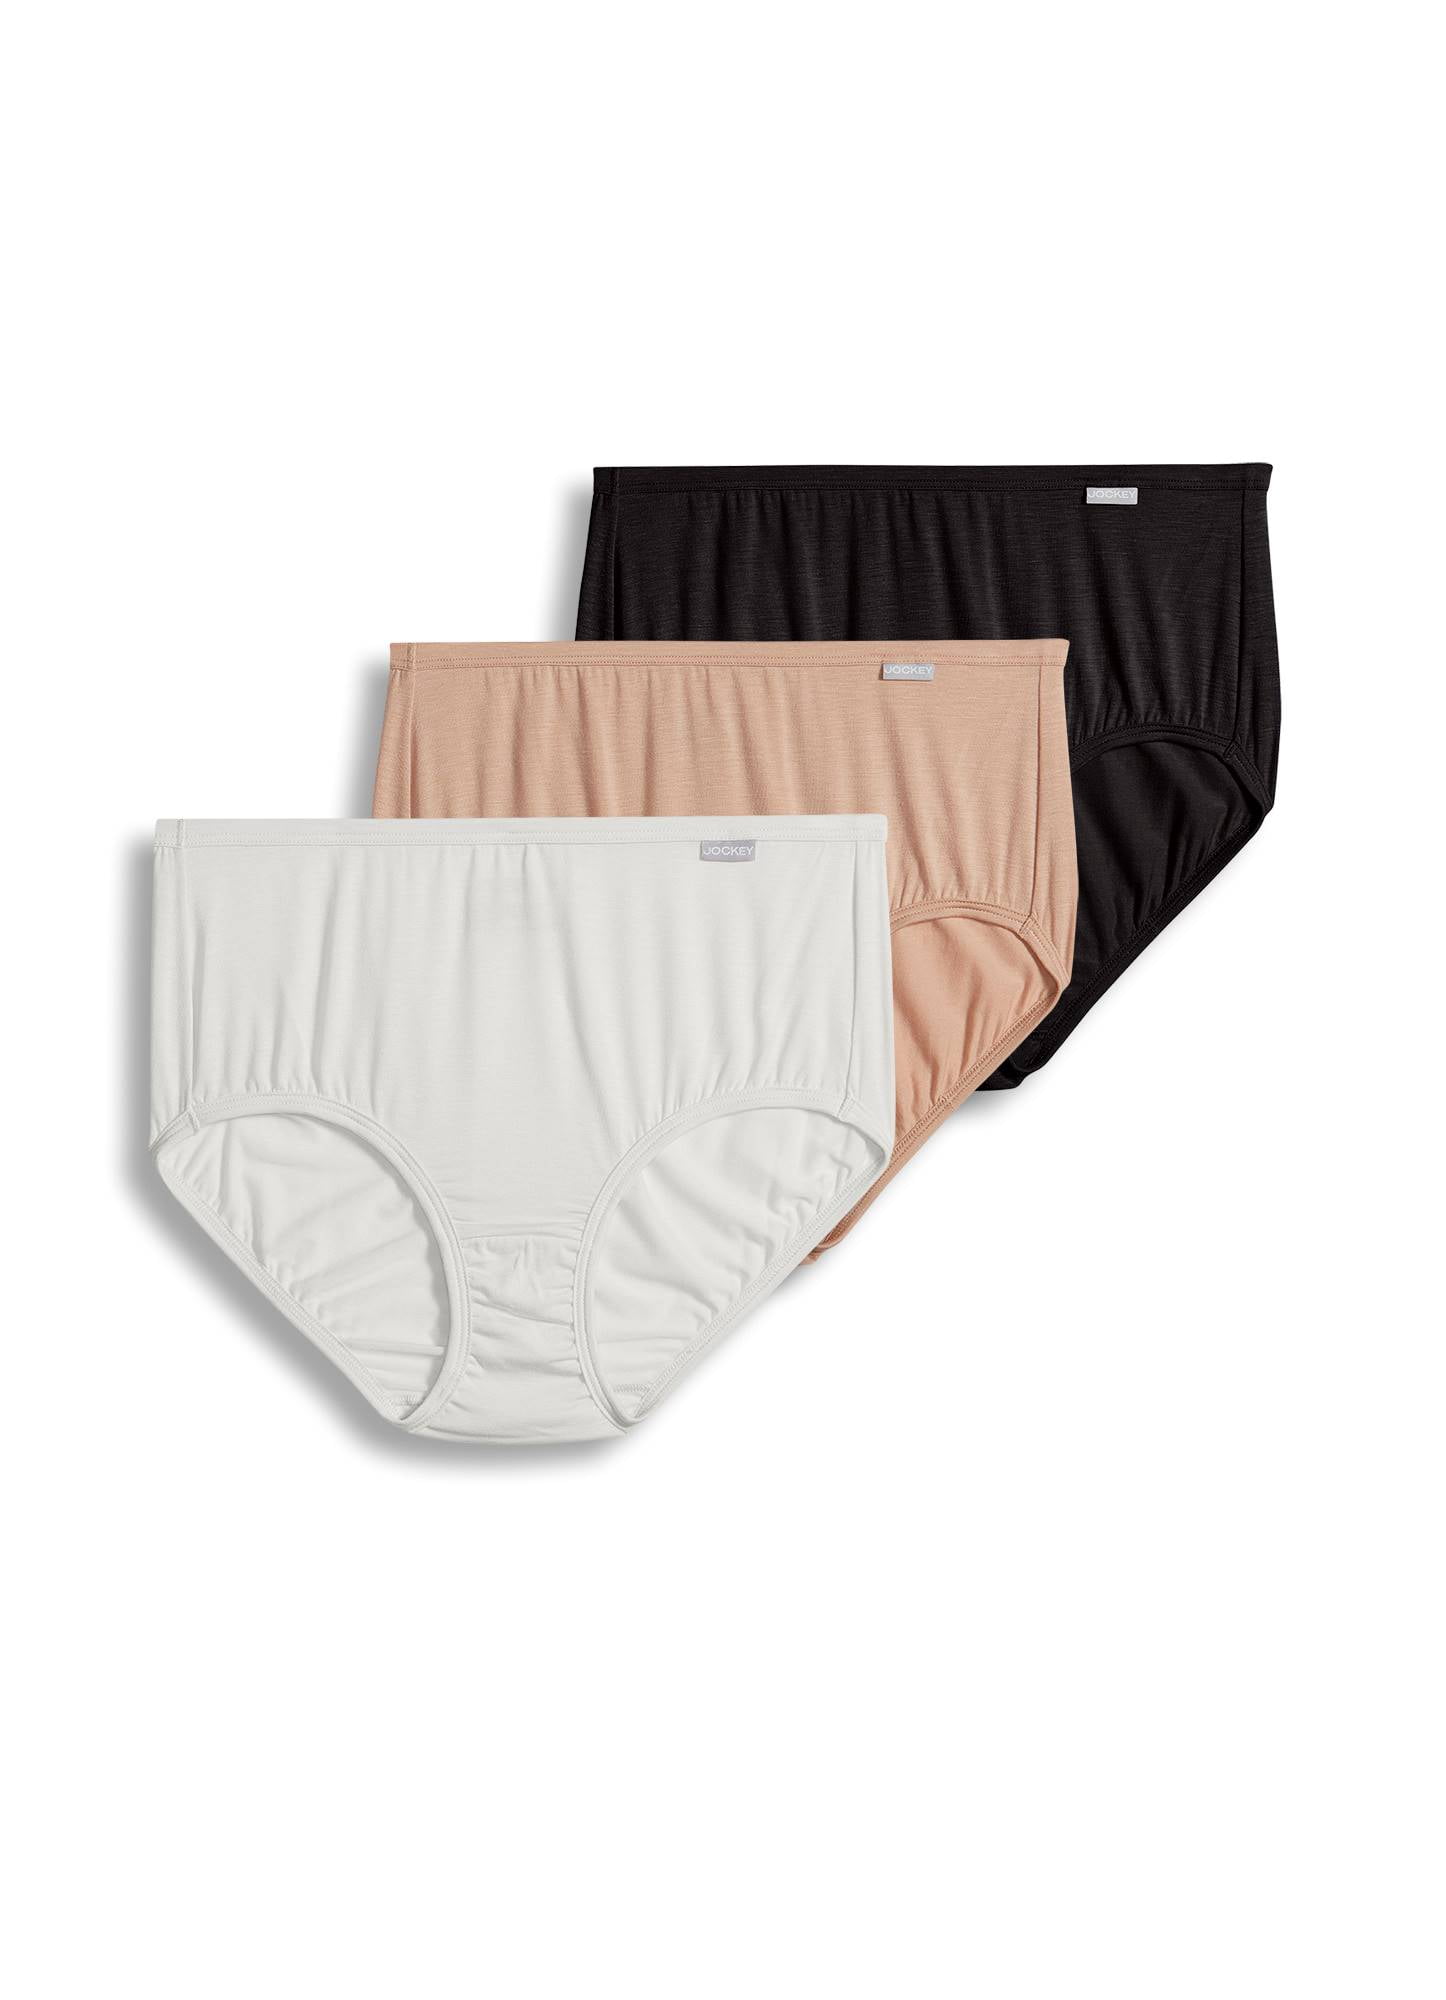 New 3 Pk Jockey Elance Supersoft Micromodal Brief Underwear